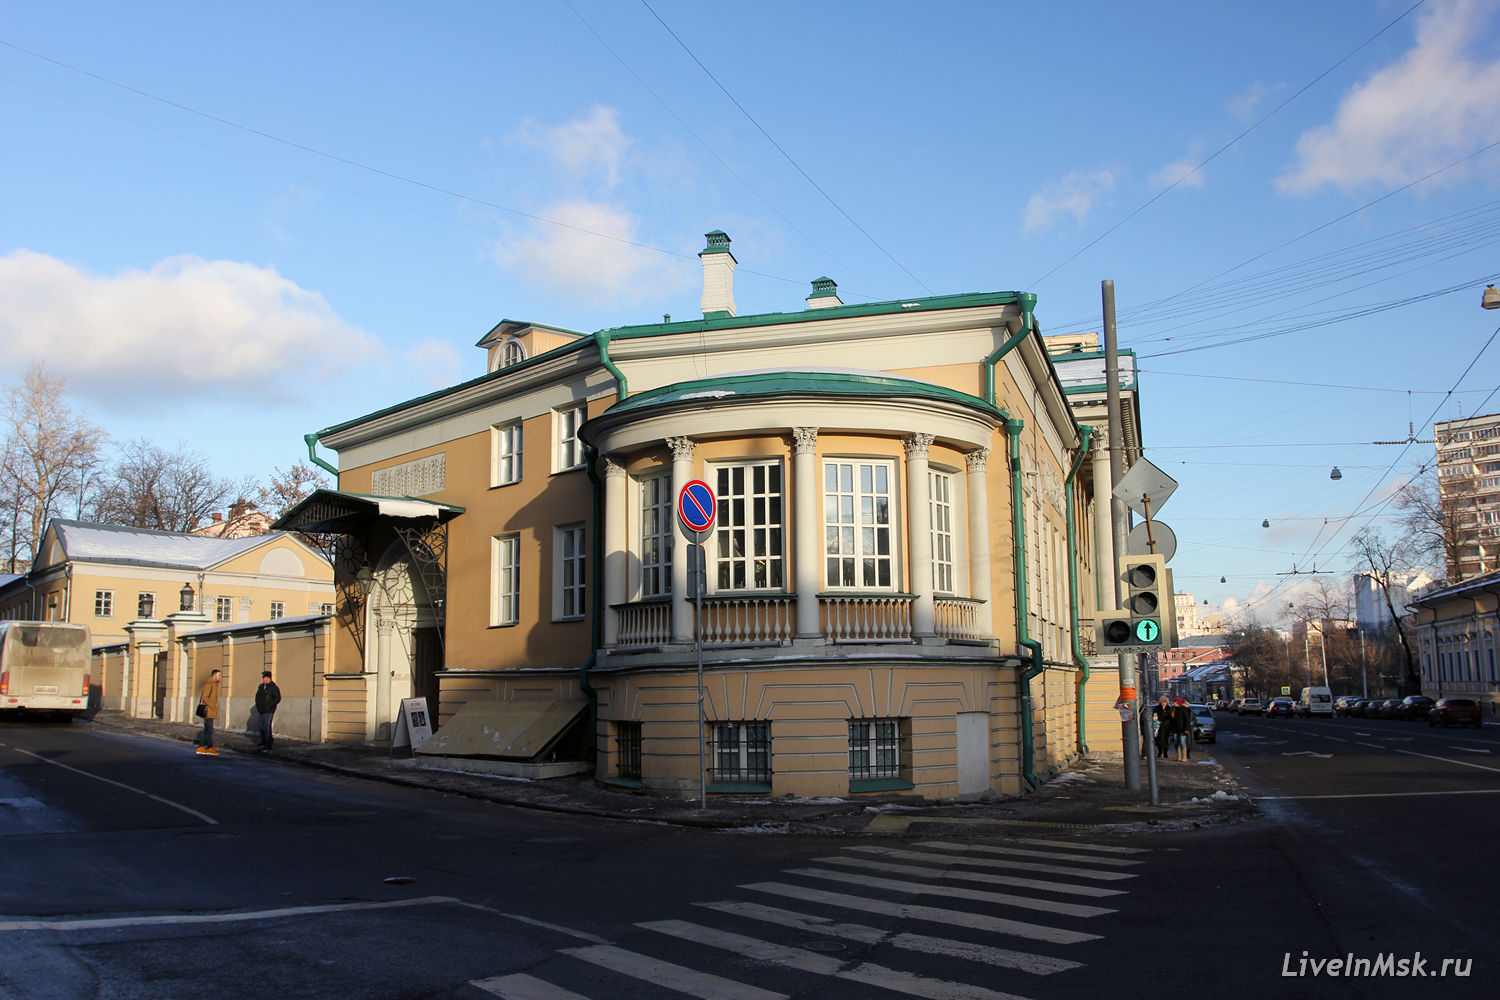 Дом Муравьевых-Апостолов, фото 2015 года